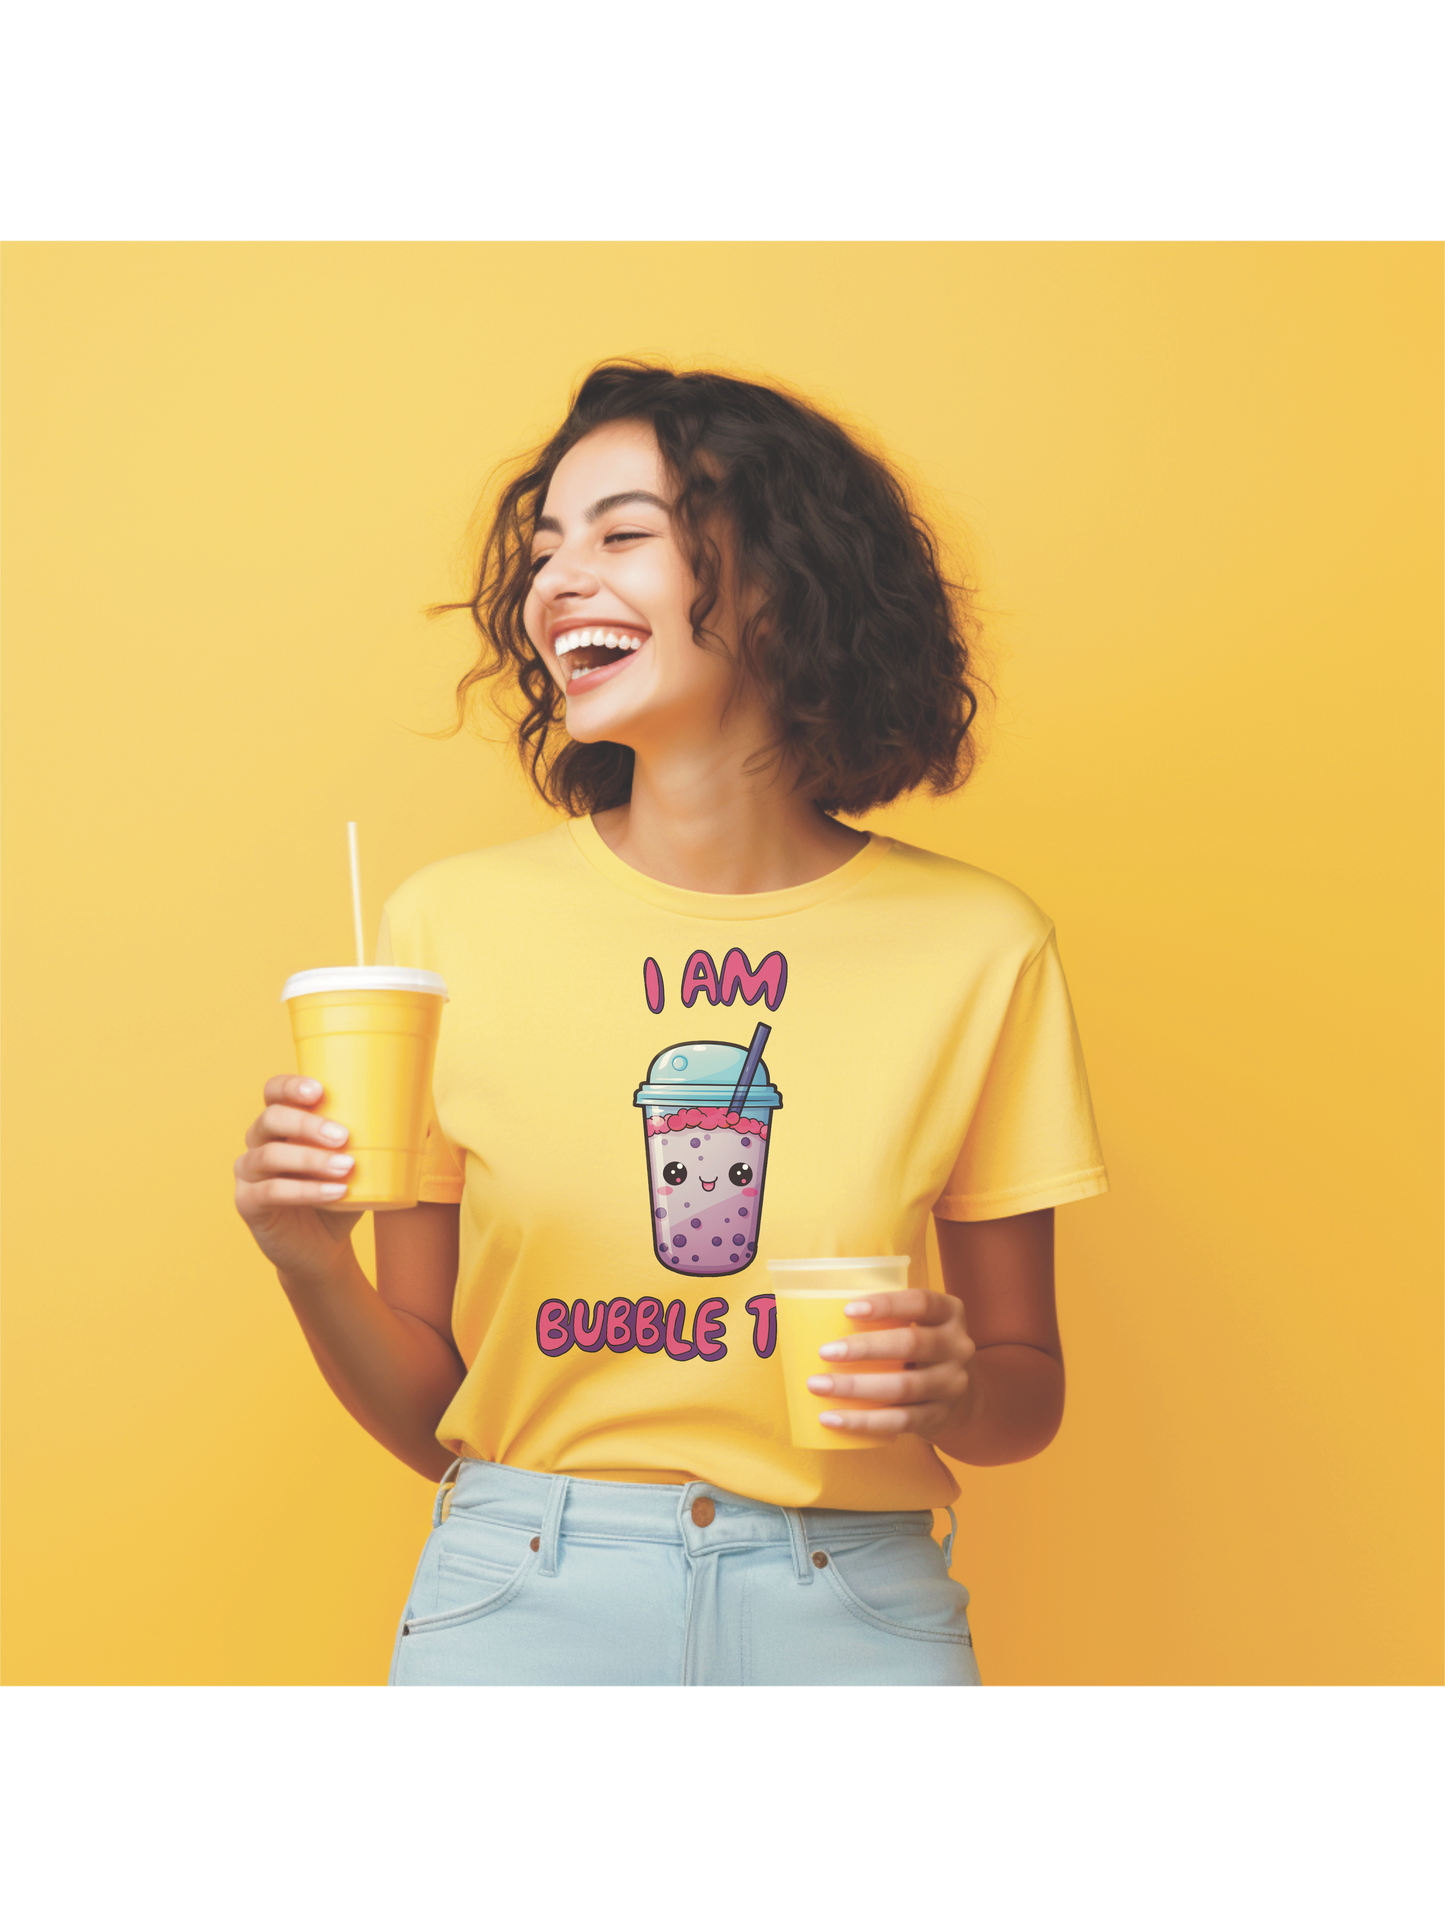 I am Bubble Tea, Graphic T-Shirt, Cute Kawaii Silly